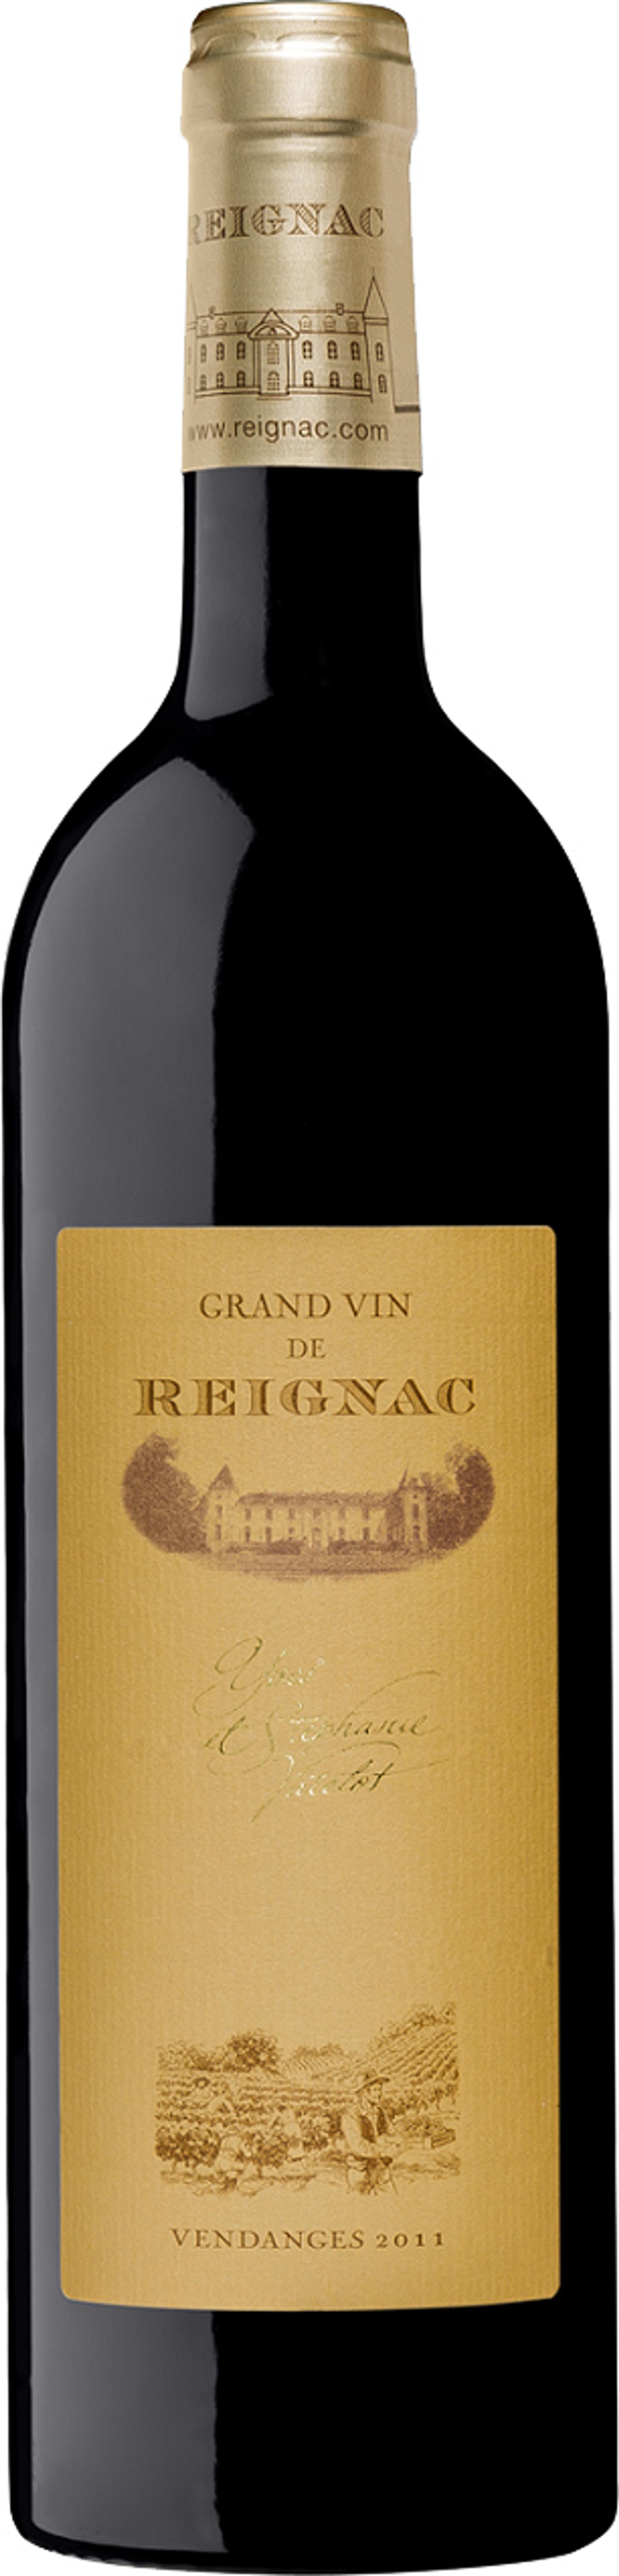 Grand Vin de Reignac